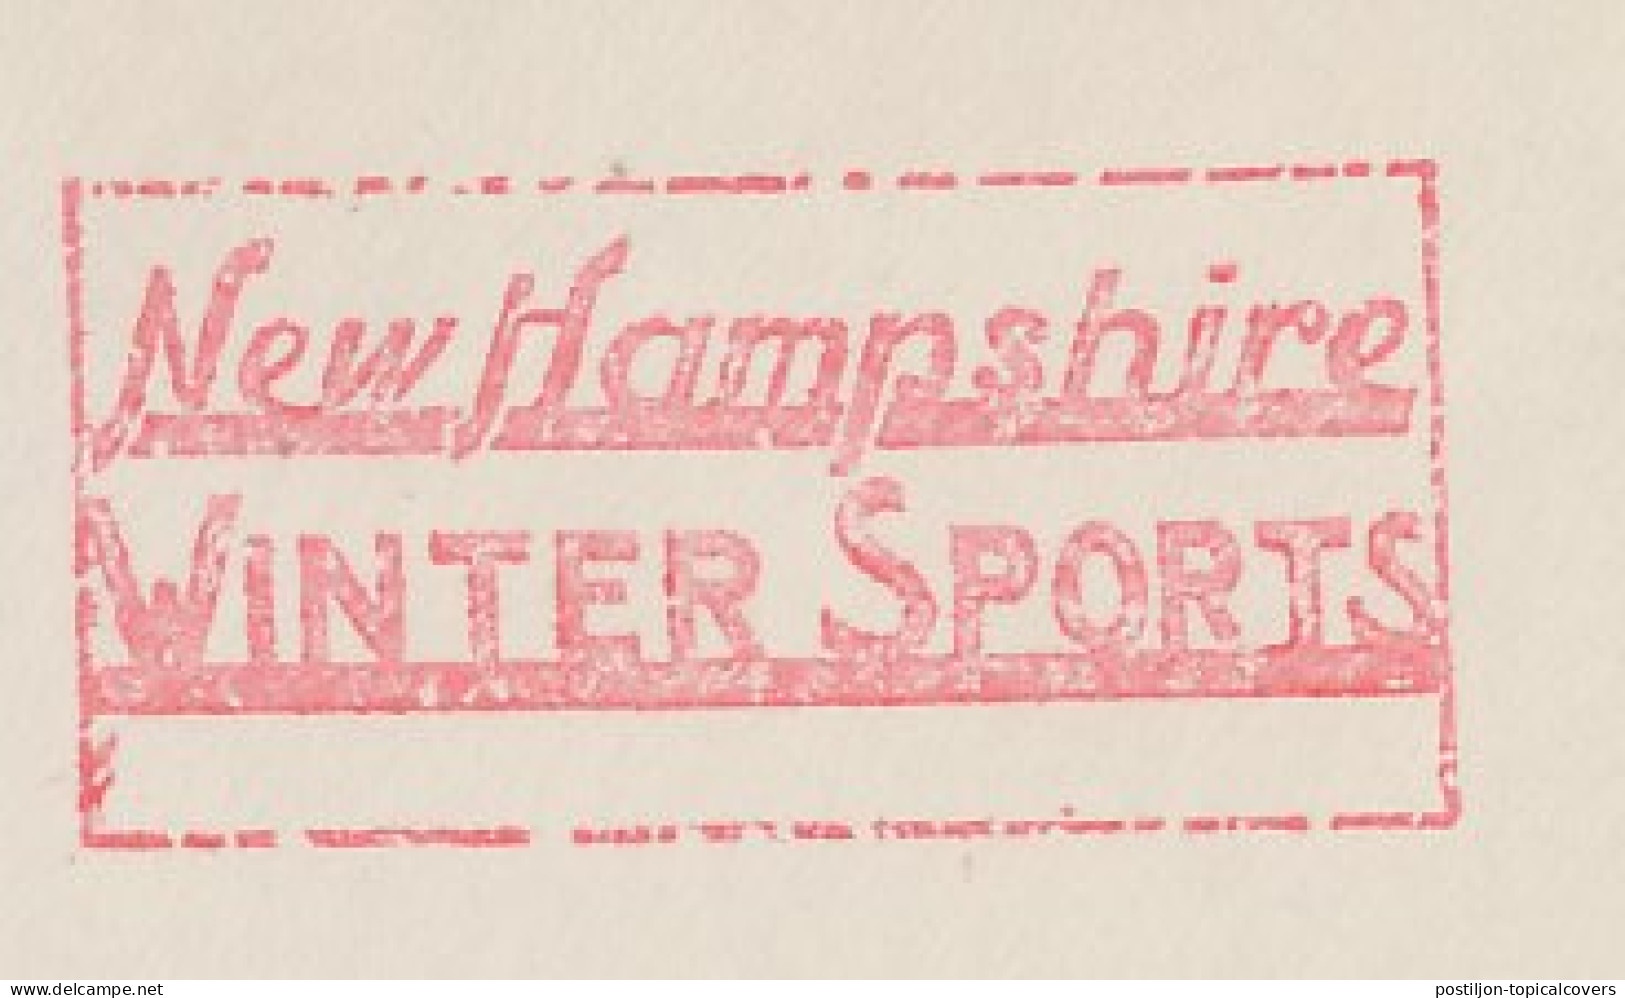 Meter Top Cut USA 1937 Winter Sports - New Hampshire - Winter (Varia)